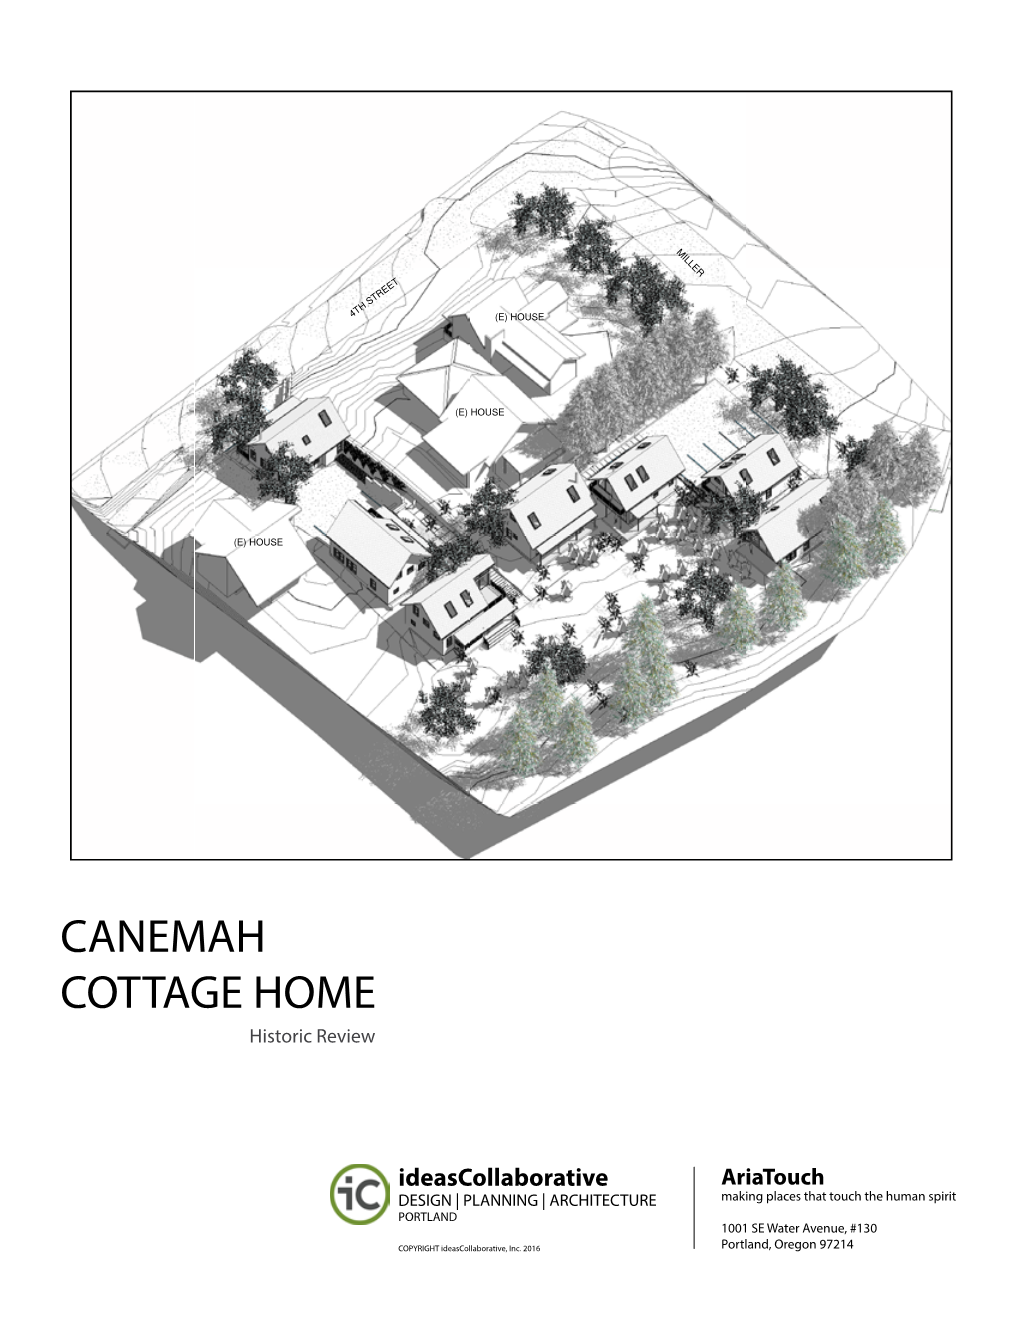 Canemah Cottage Home